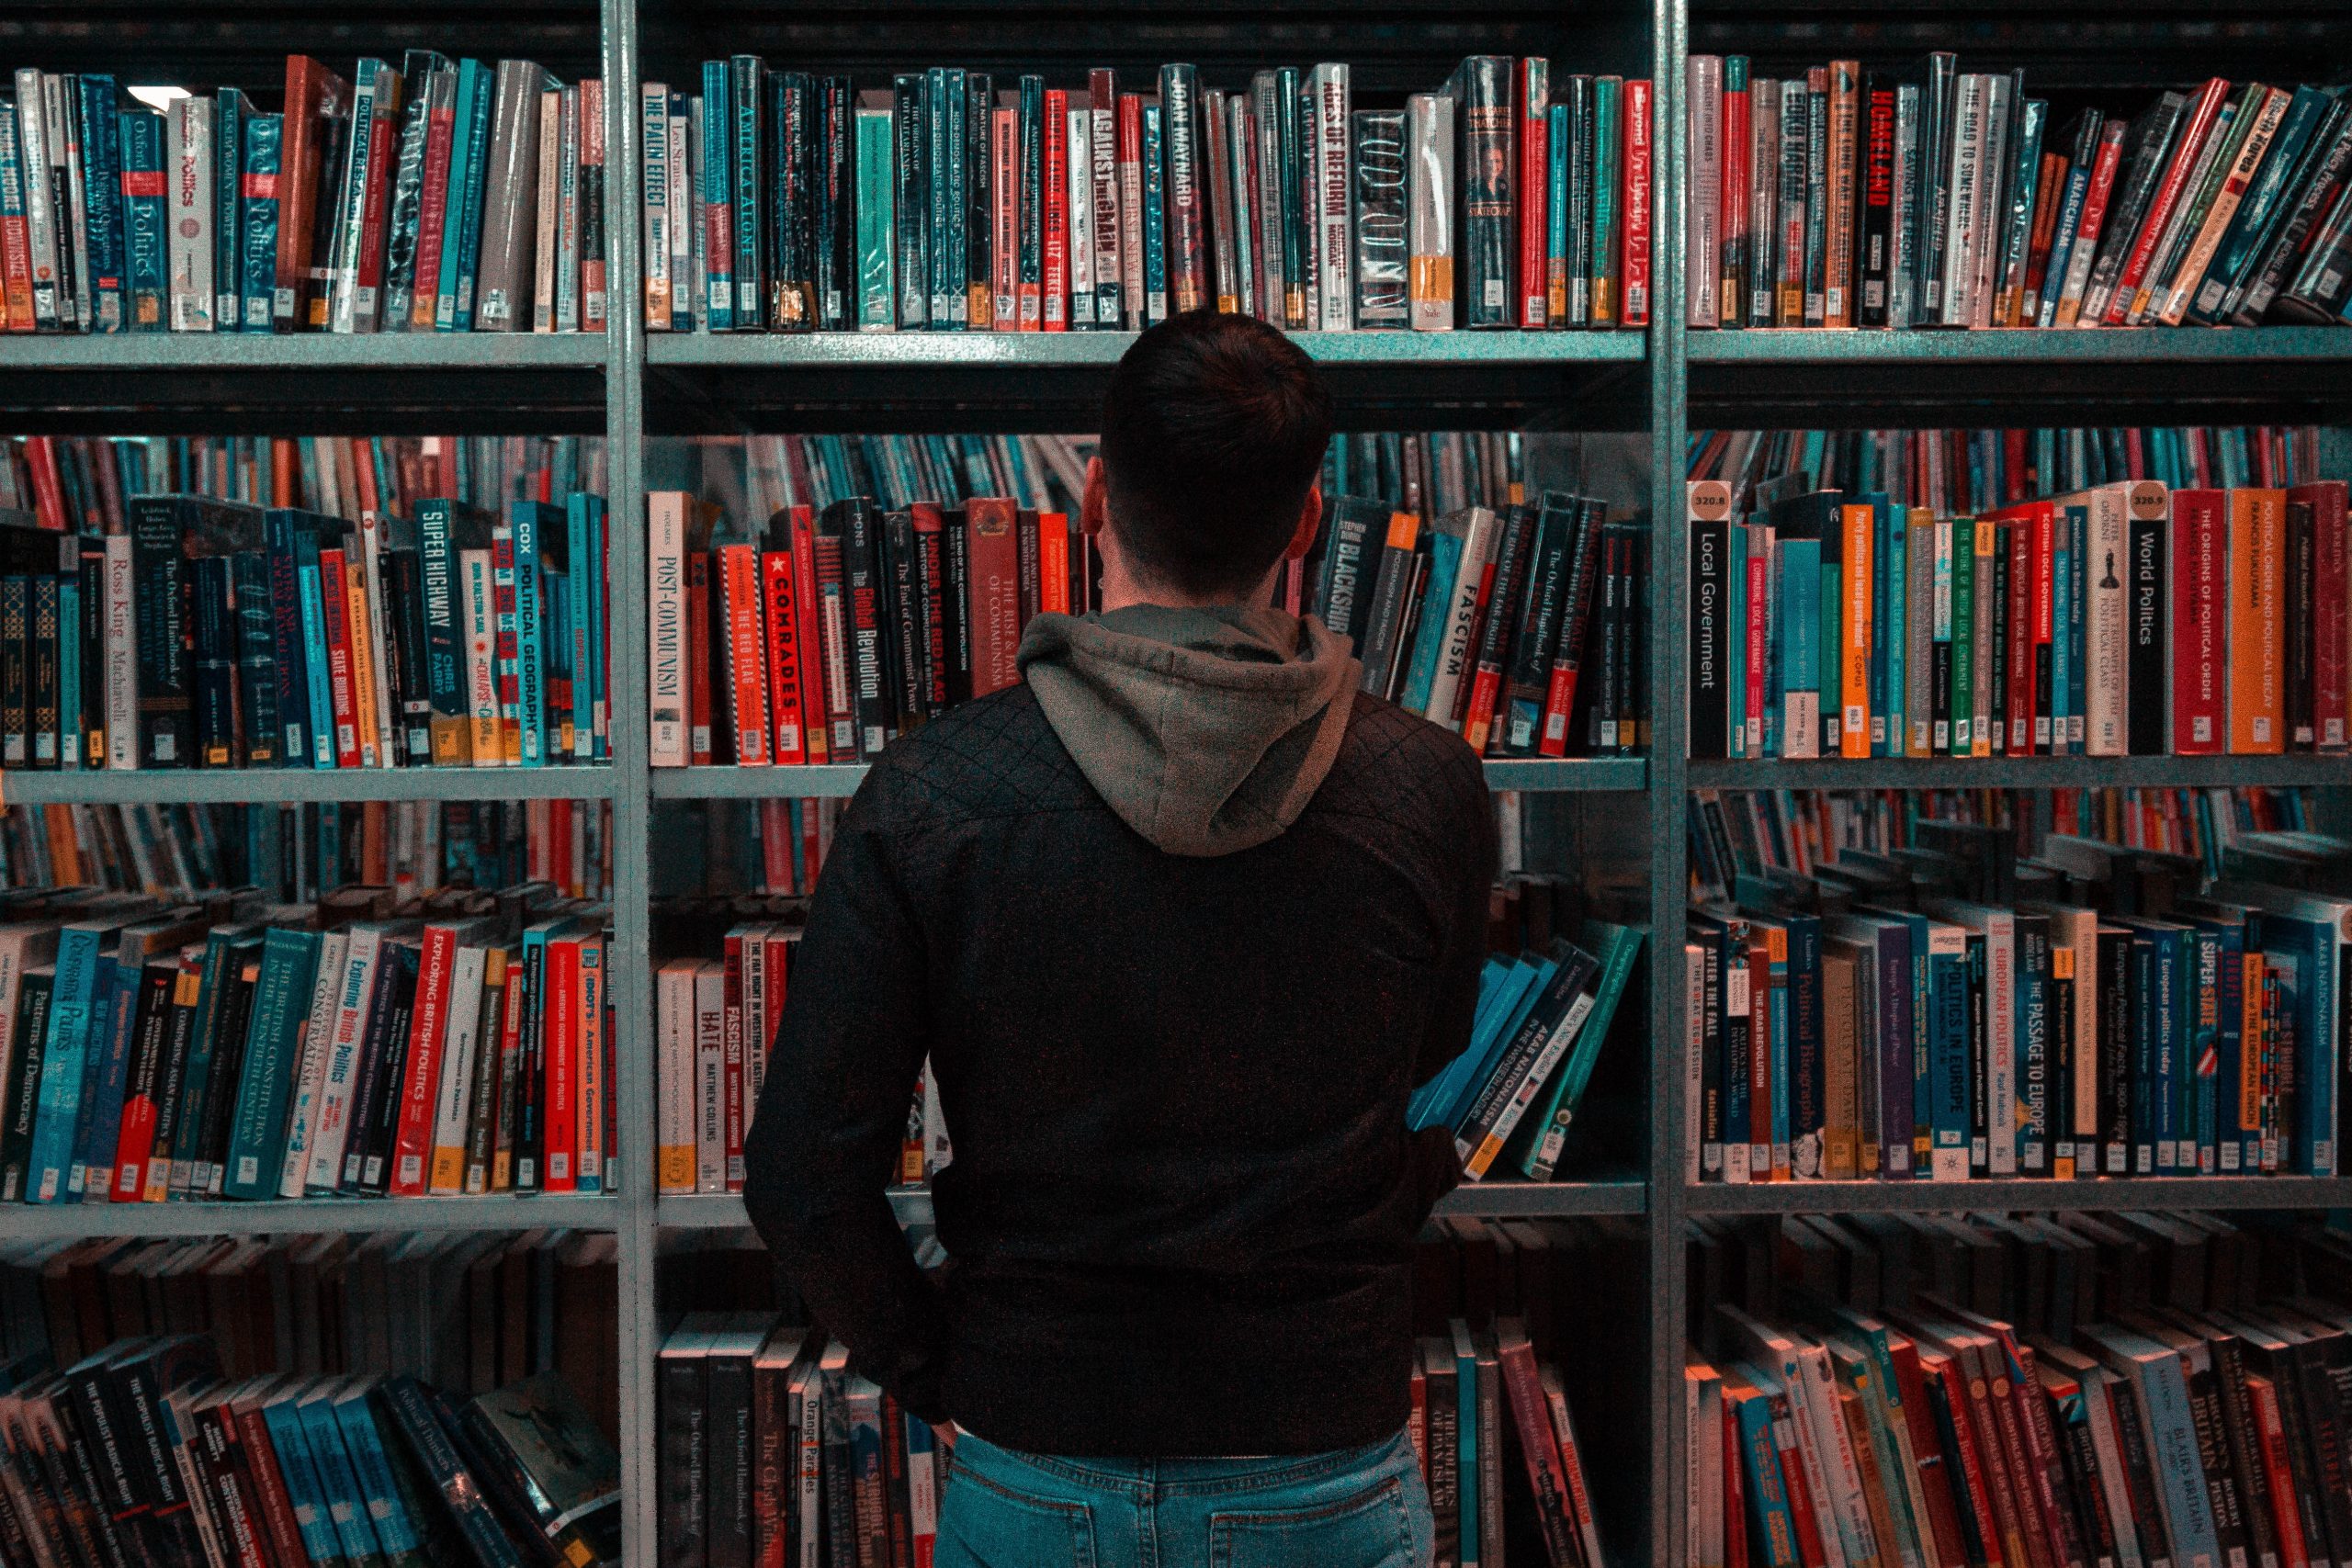 Image of a dark-lit bookshelf with a figure standing facing it. The figure wears a dark hoodie.